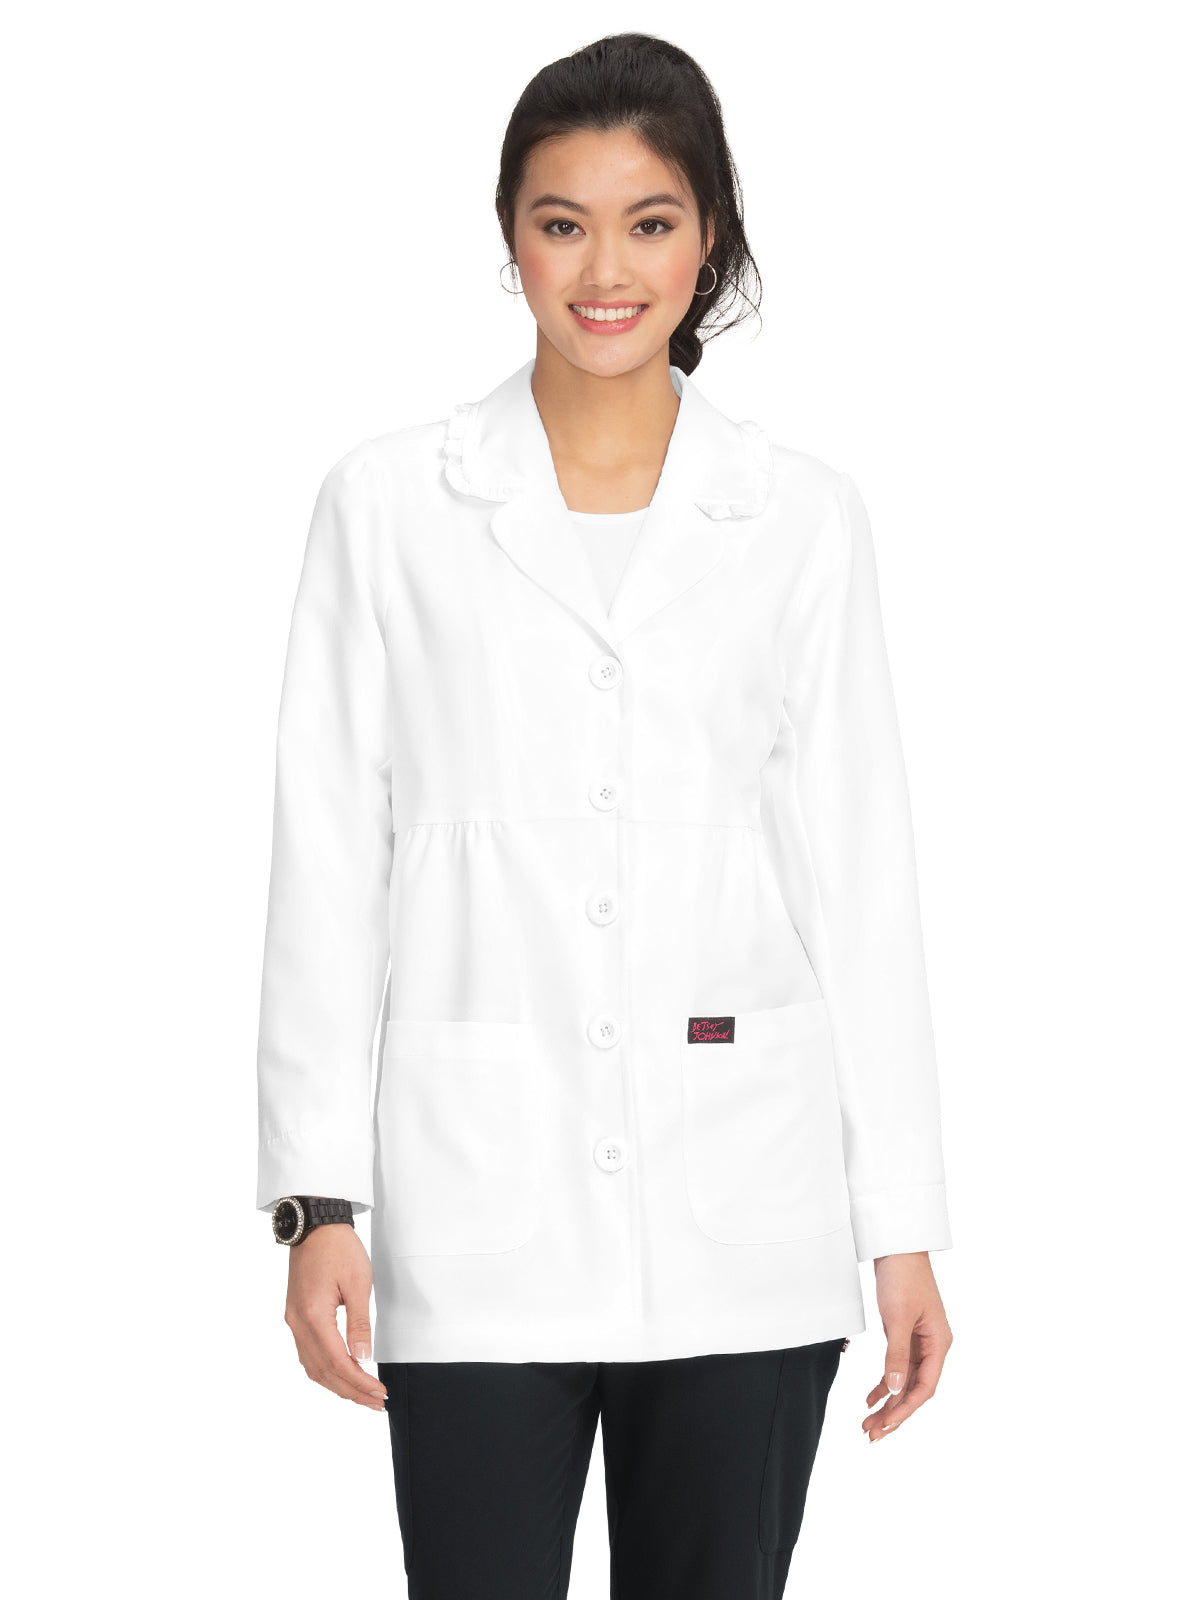 Women's Two-Pocket 31" Juniper Lab Coat